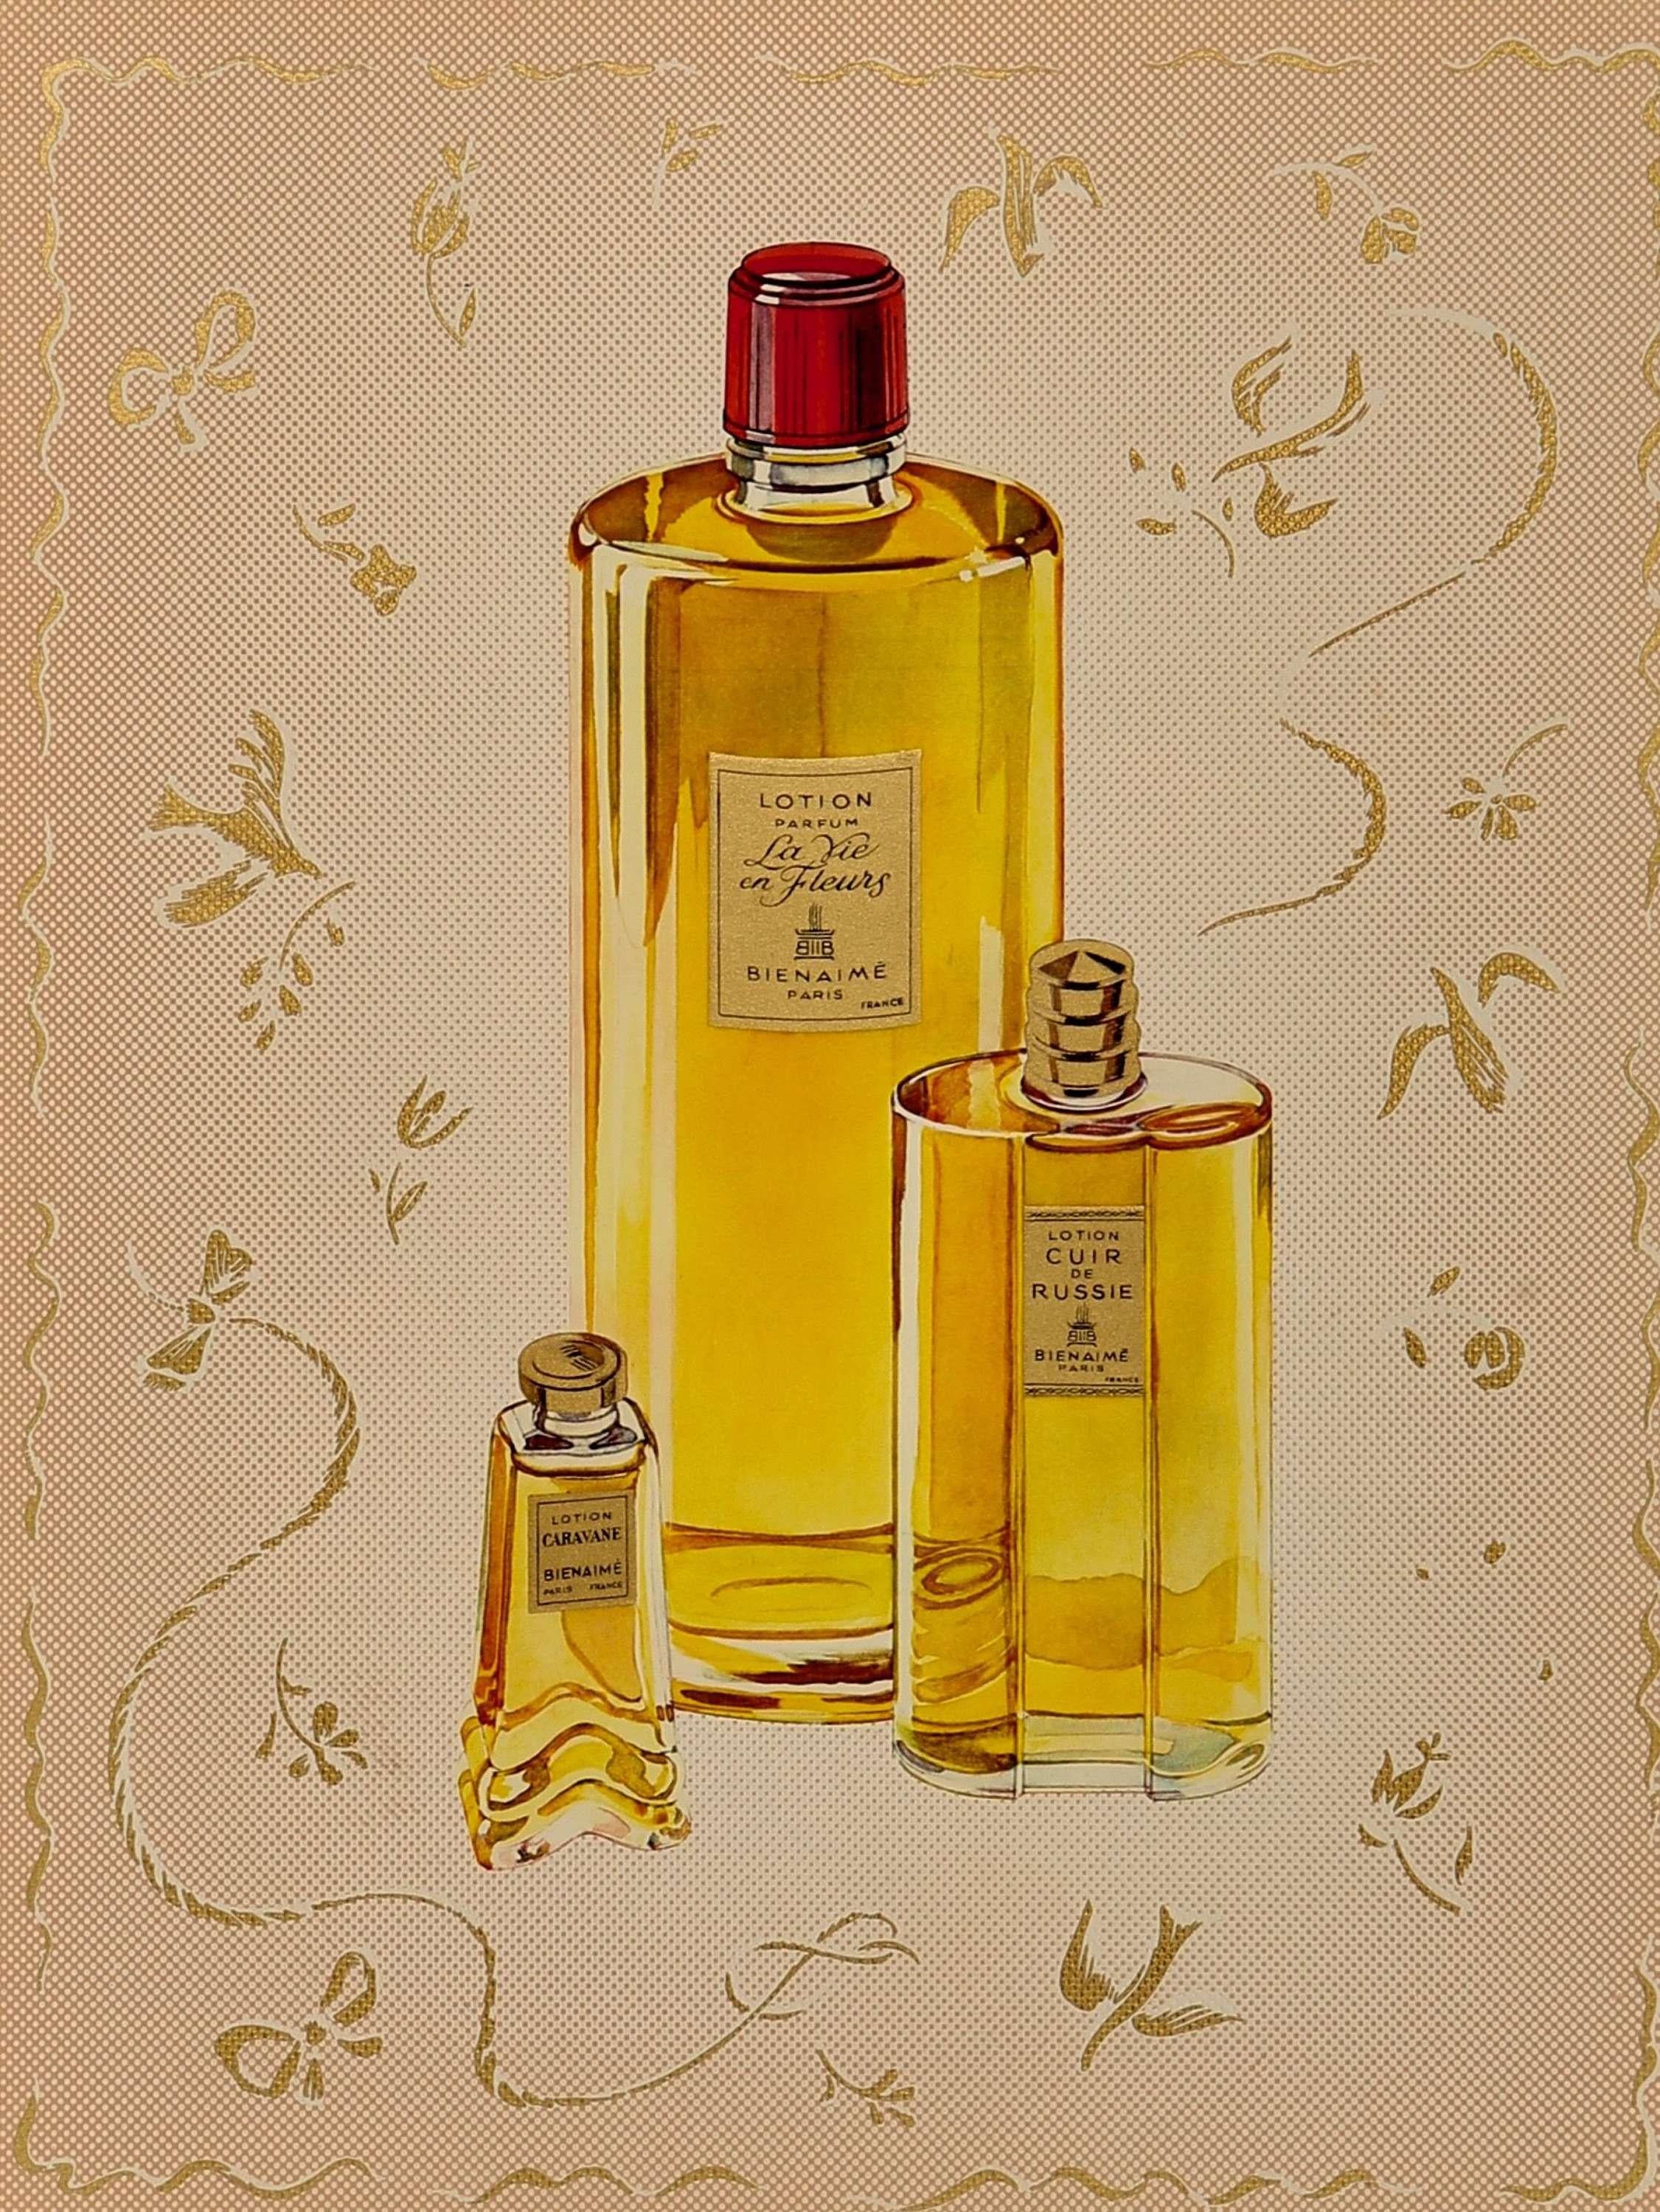 1947 perfume bottle